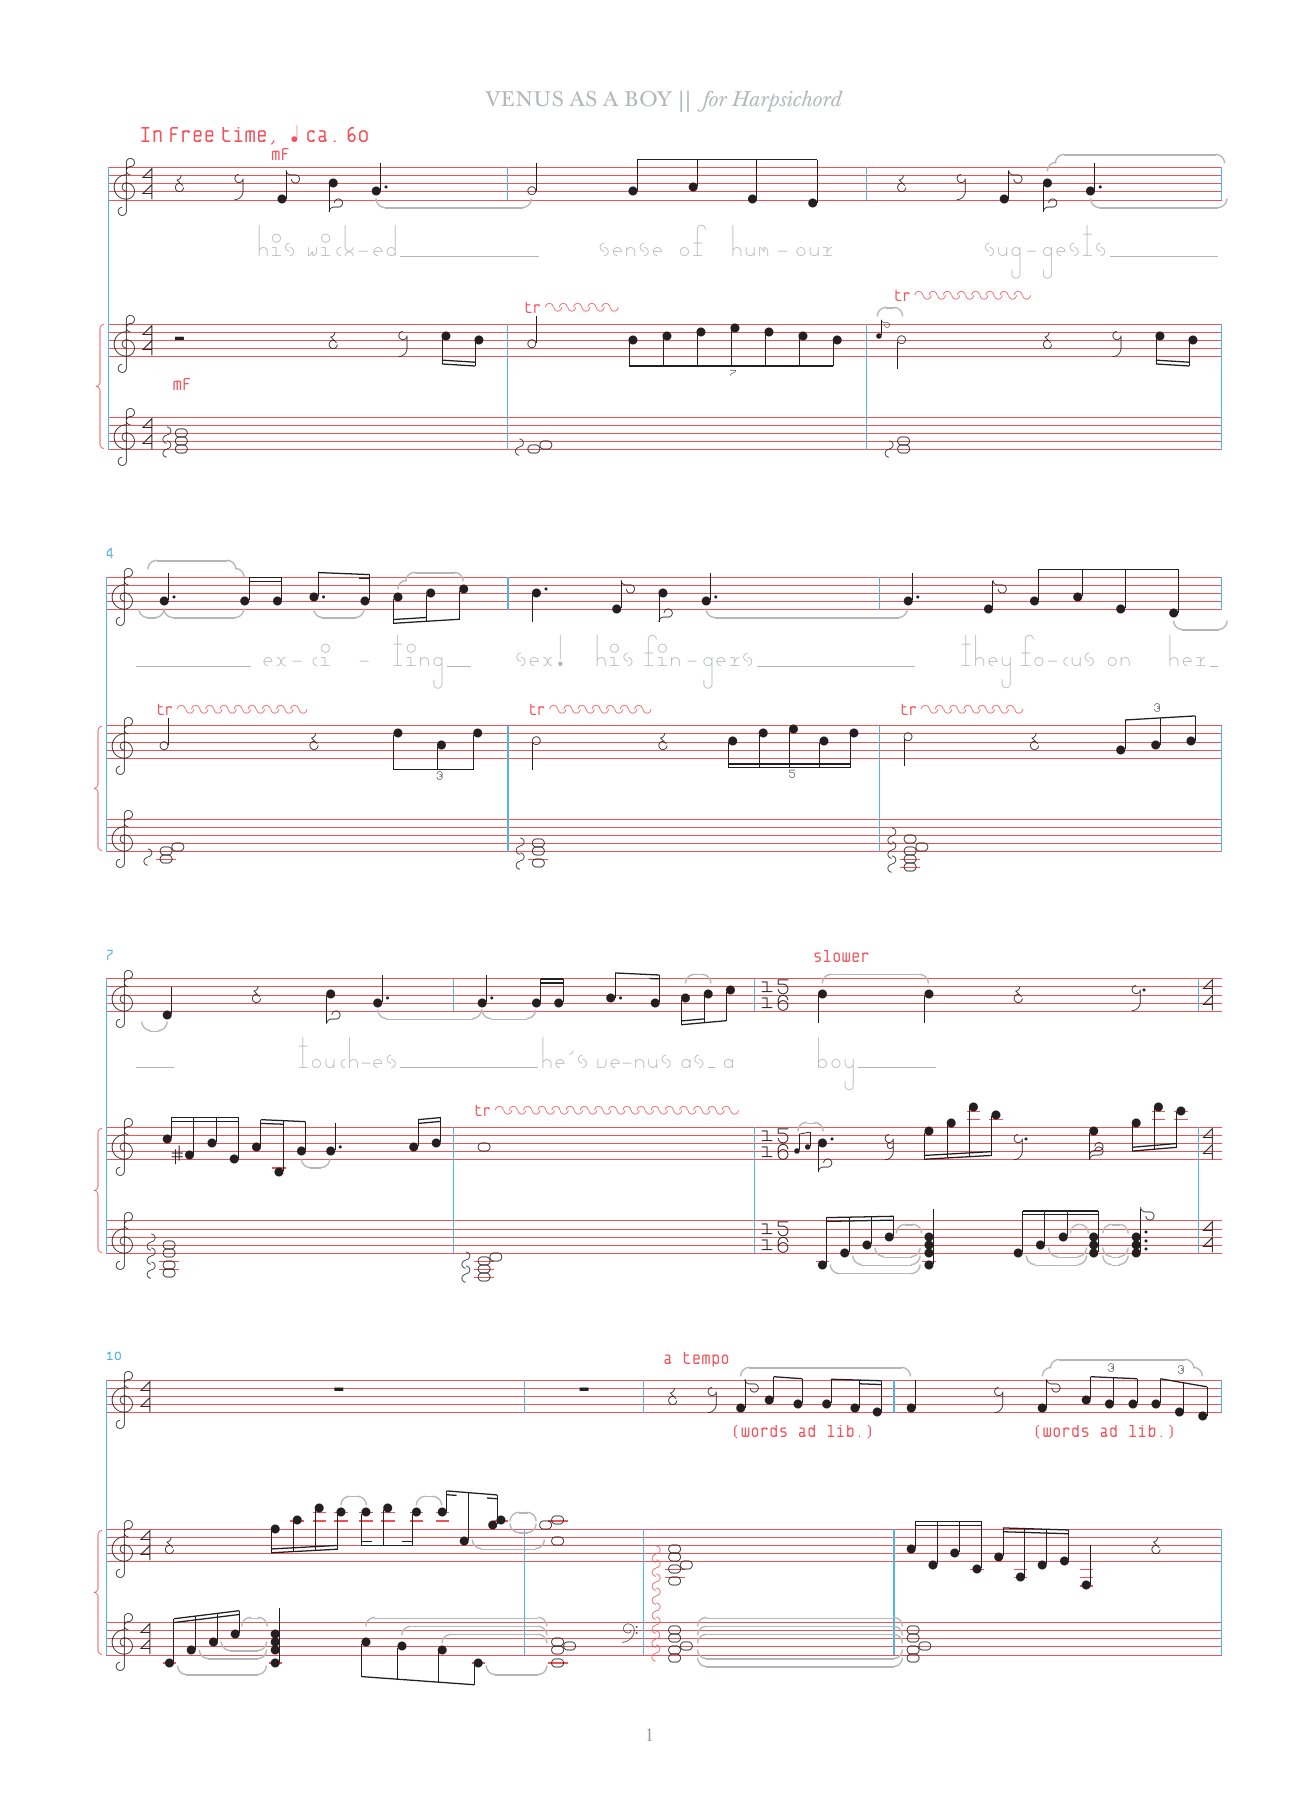 Bjork Venus As A Boy Sheet Music Notes & Chords for Harpsichord & Vocal - Download or Print PDF